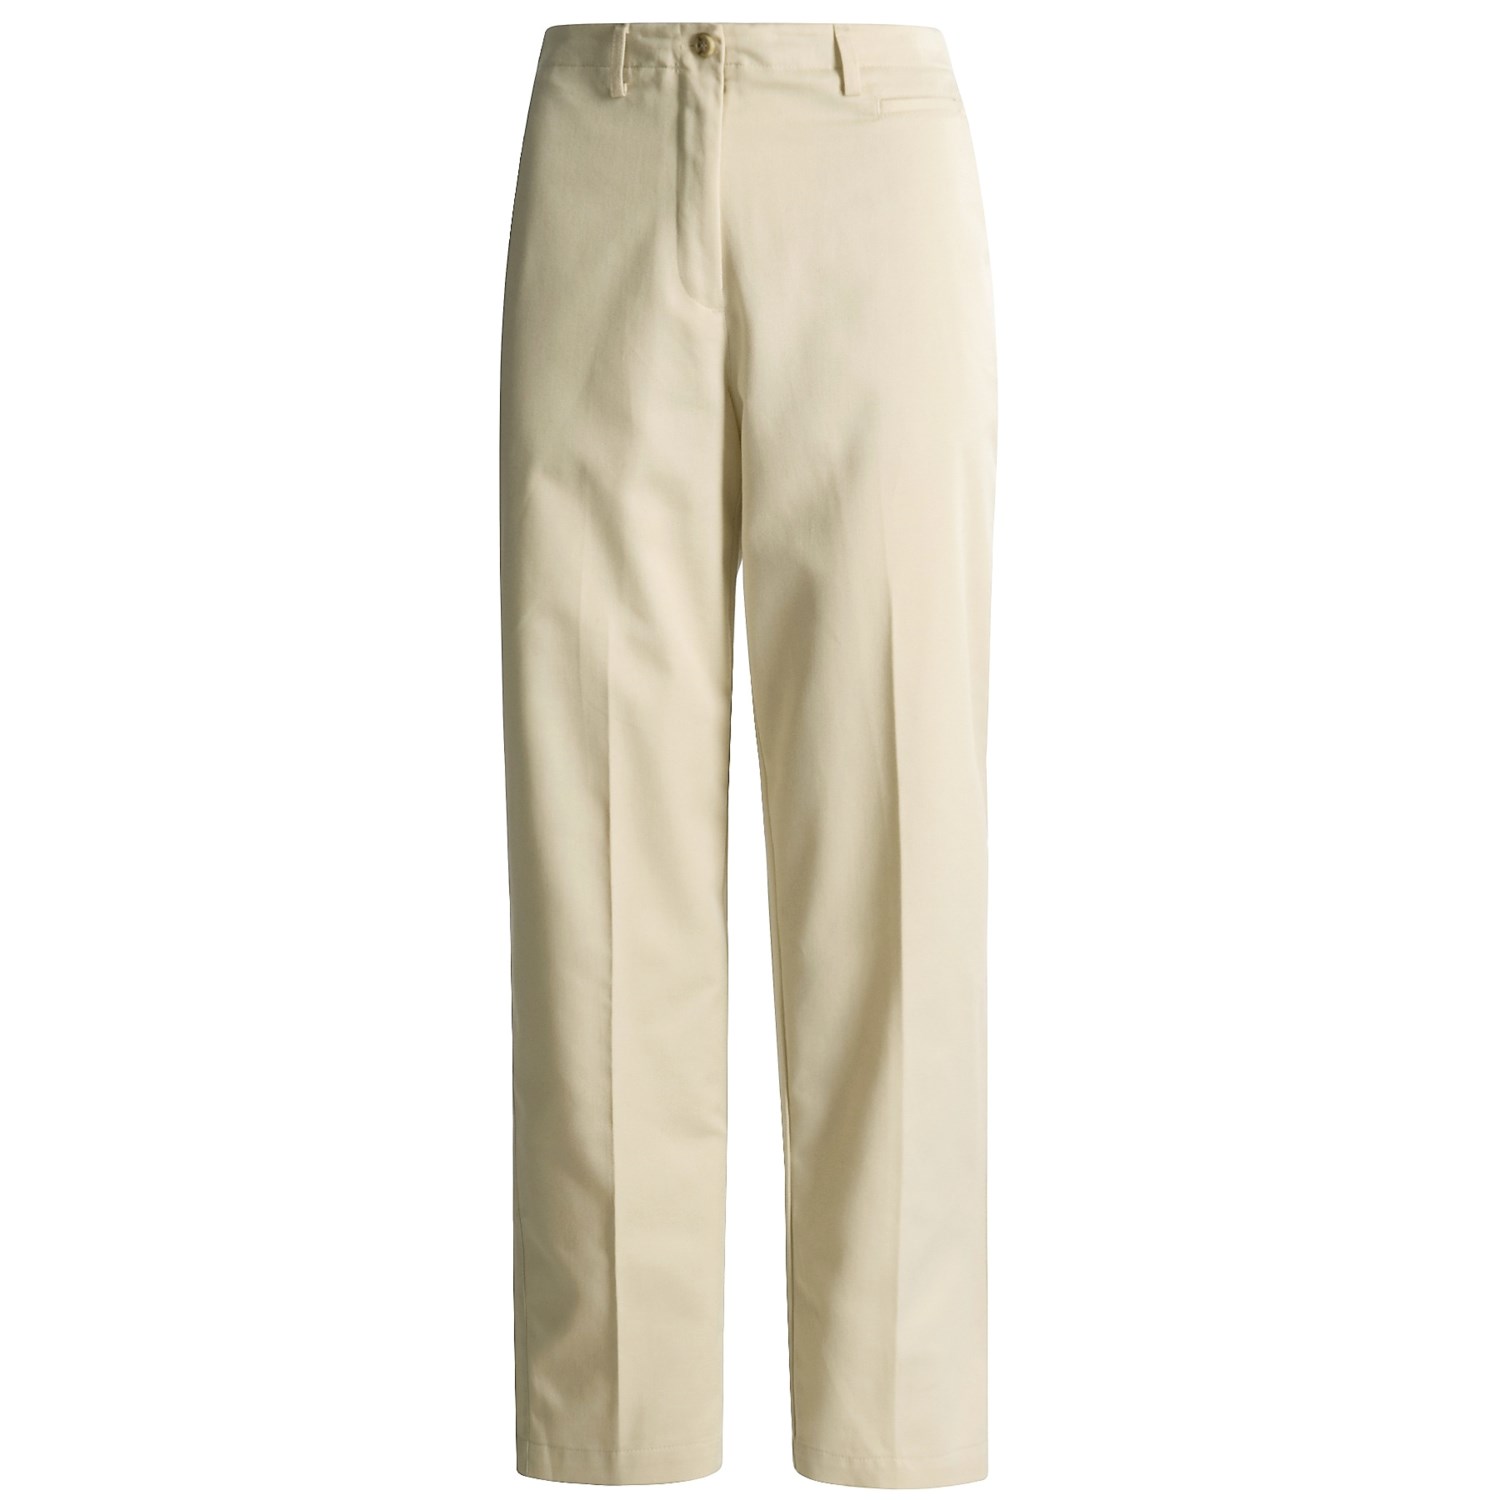 Cotton Blend Travel Pants (For Women) 19350 - Save 89%